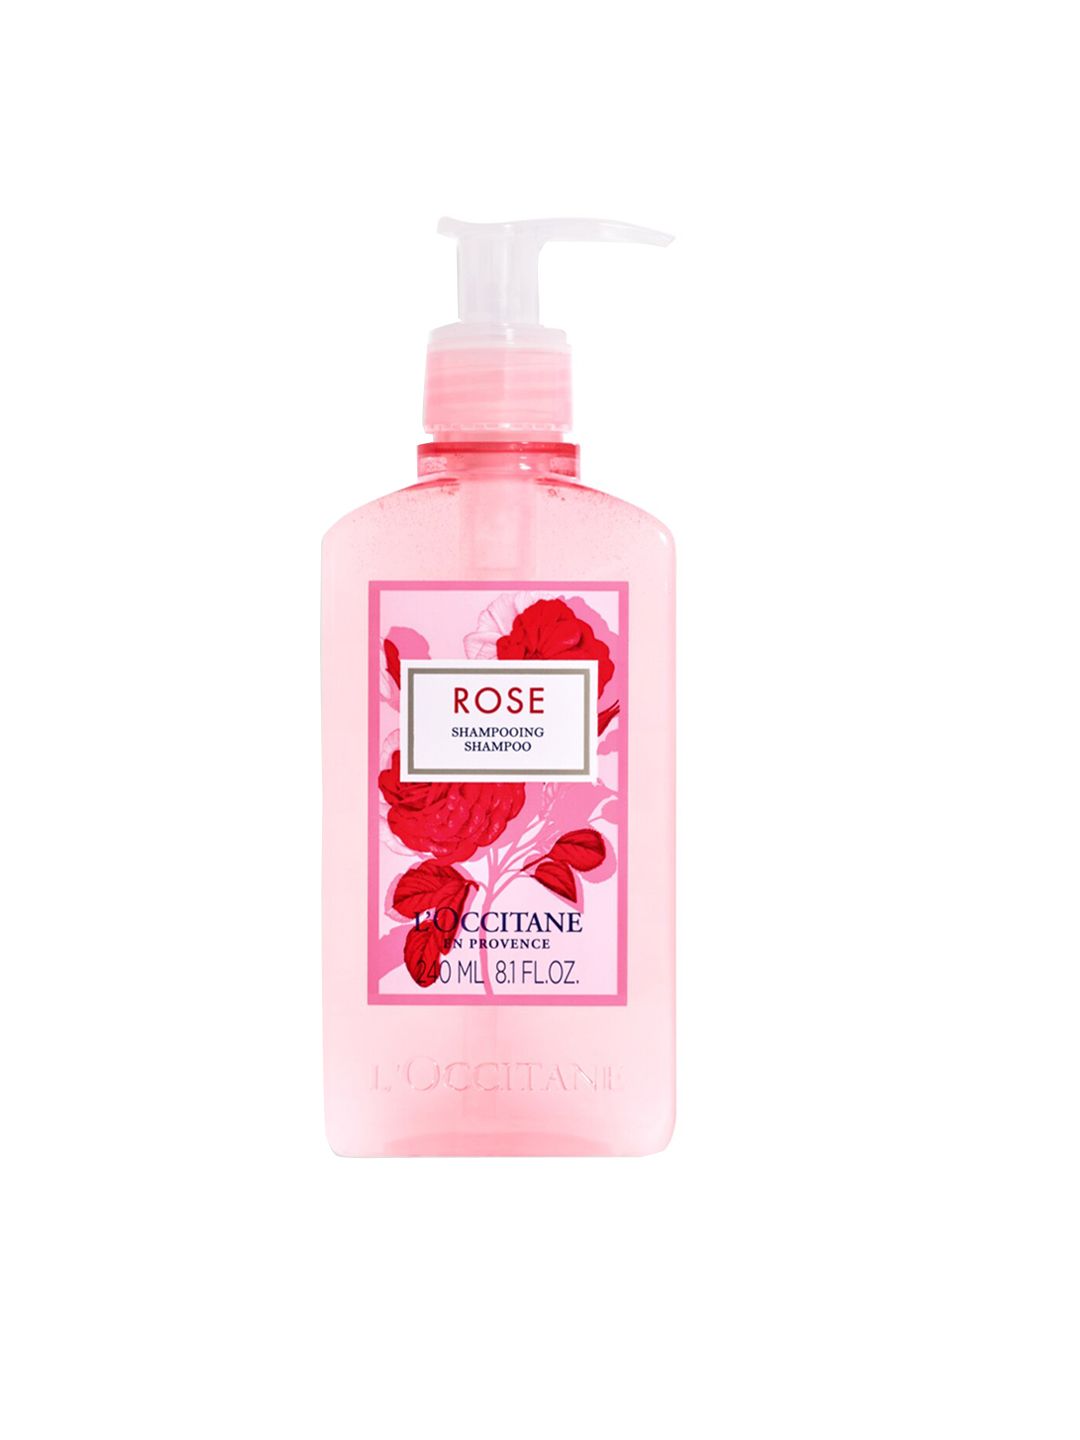 LOccitane en Provence Rose Shampoo - 240 ml Price in India